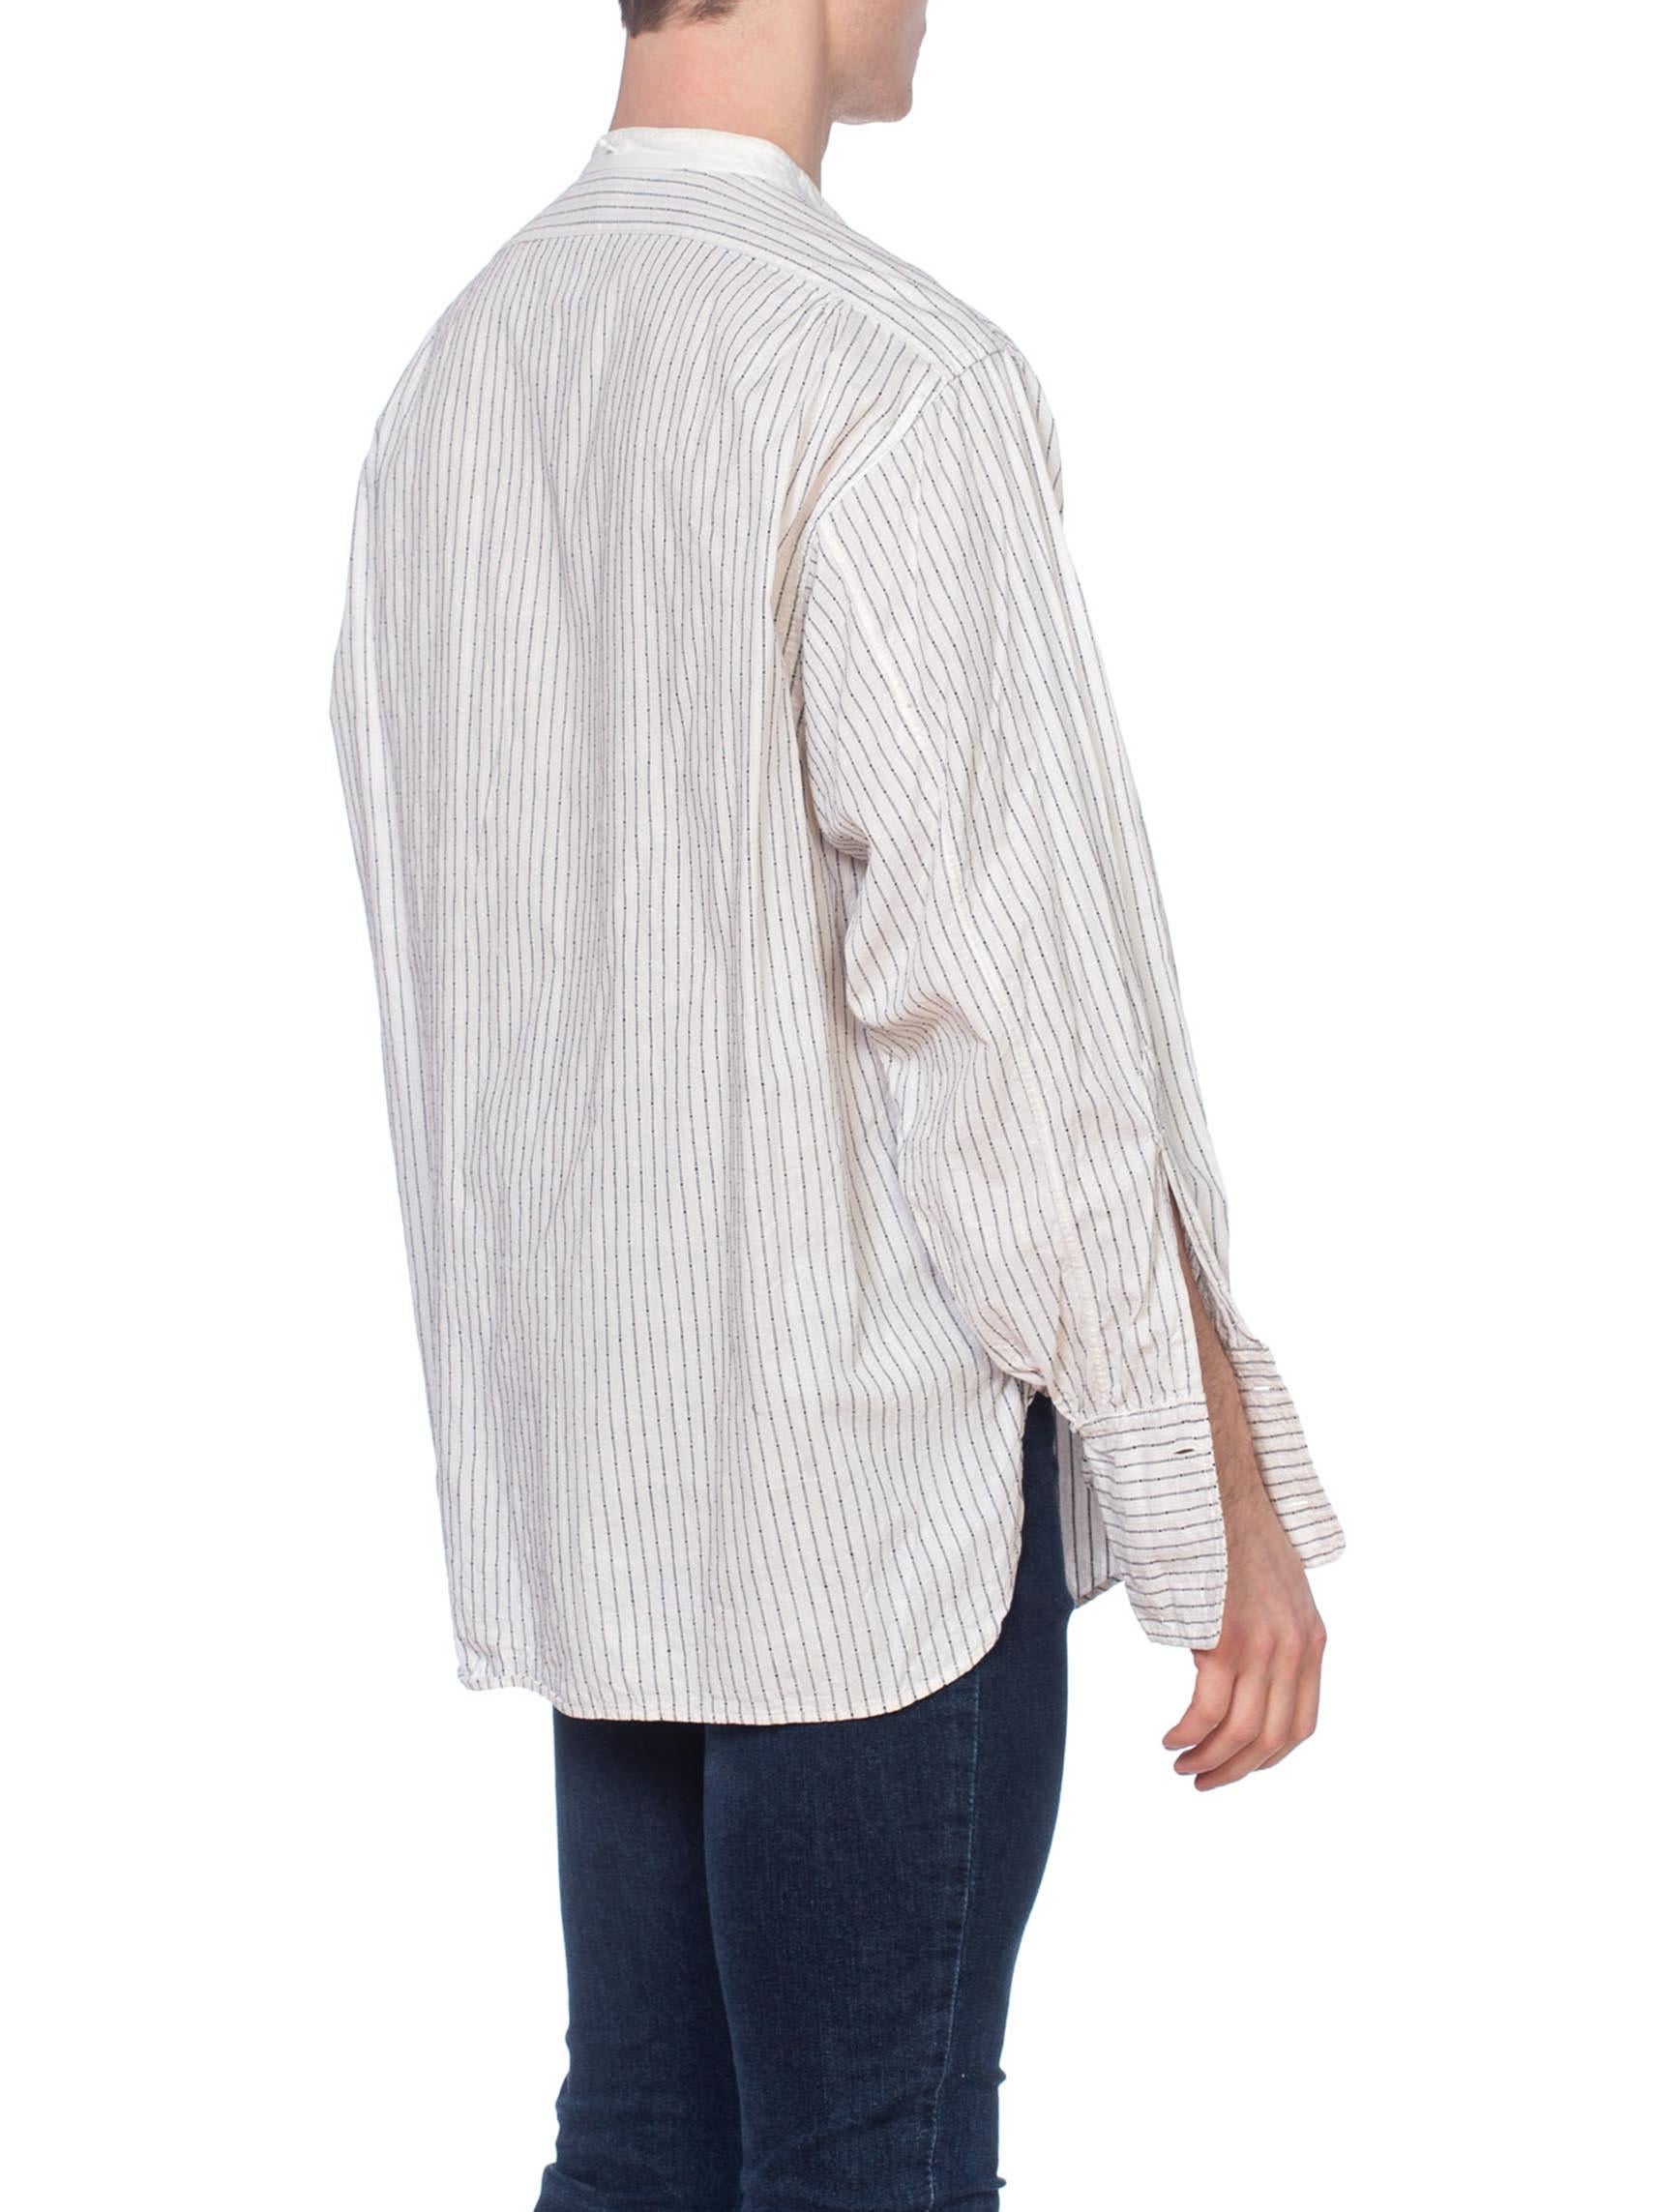 Gray 1920S Men's Edwardian Pinstripe French Cuff Cotton Shirt